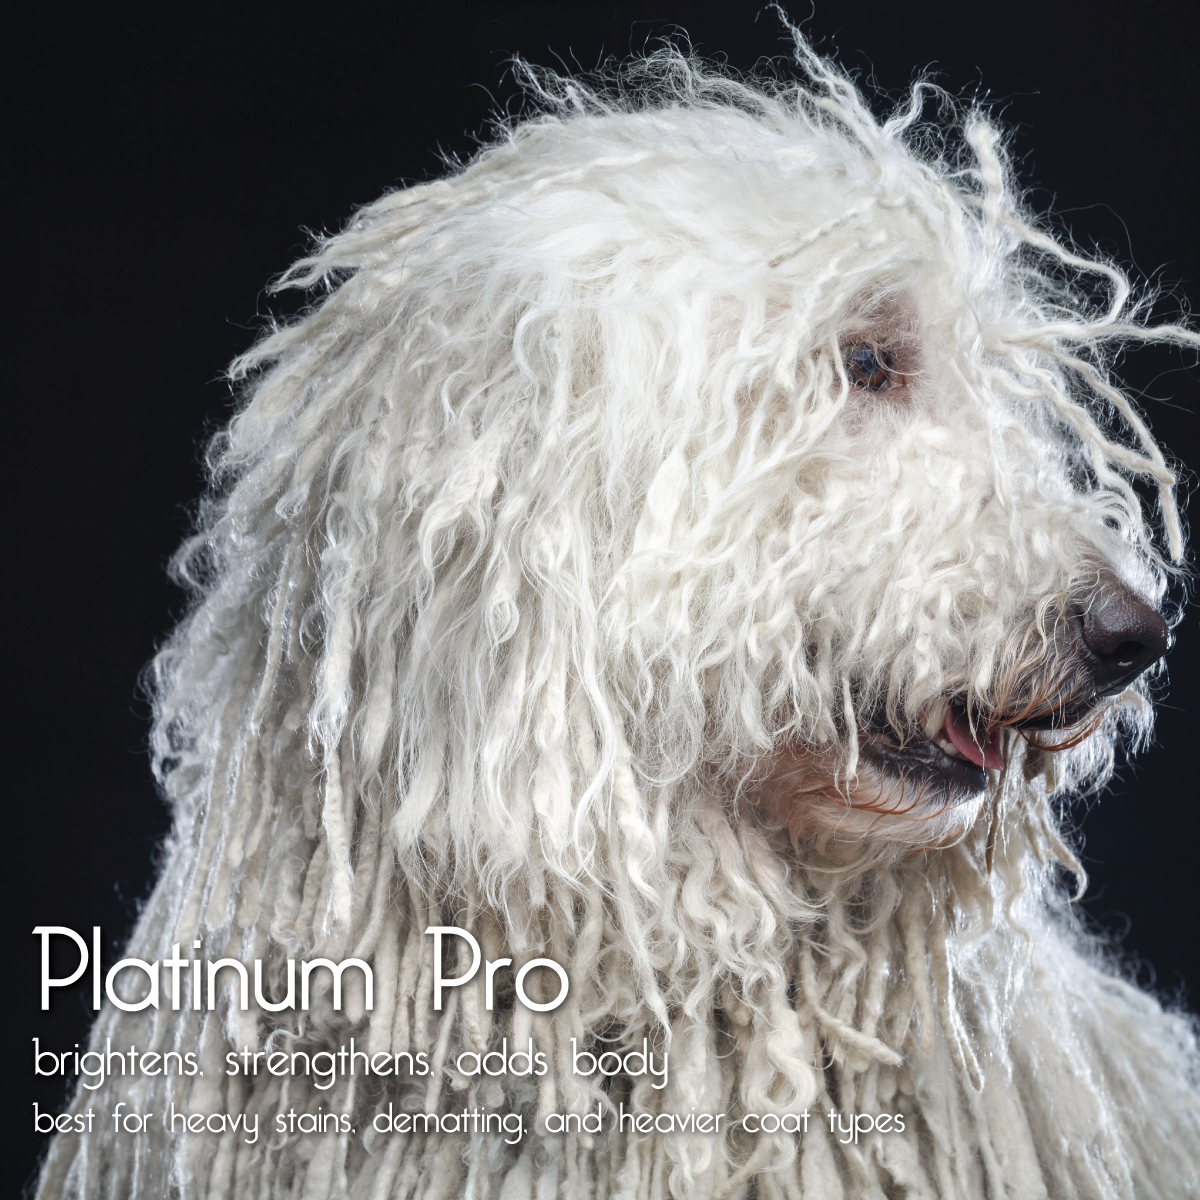 Platinum Pro Dogs Use